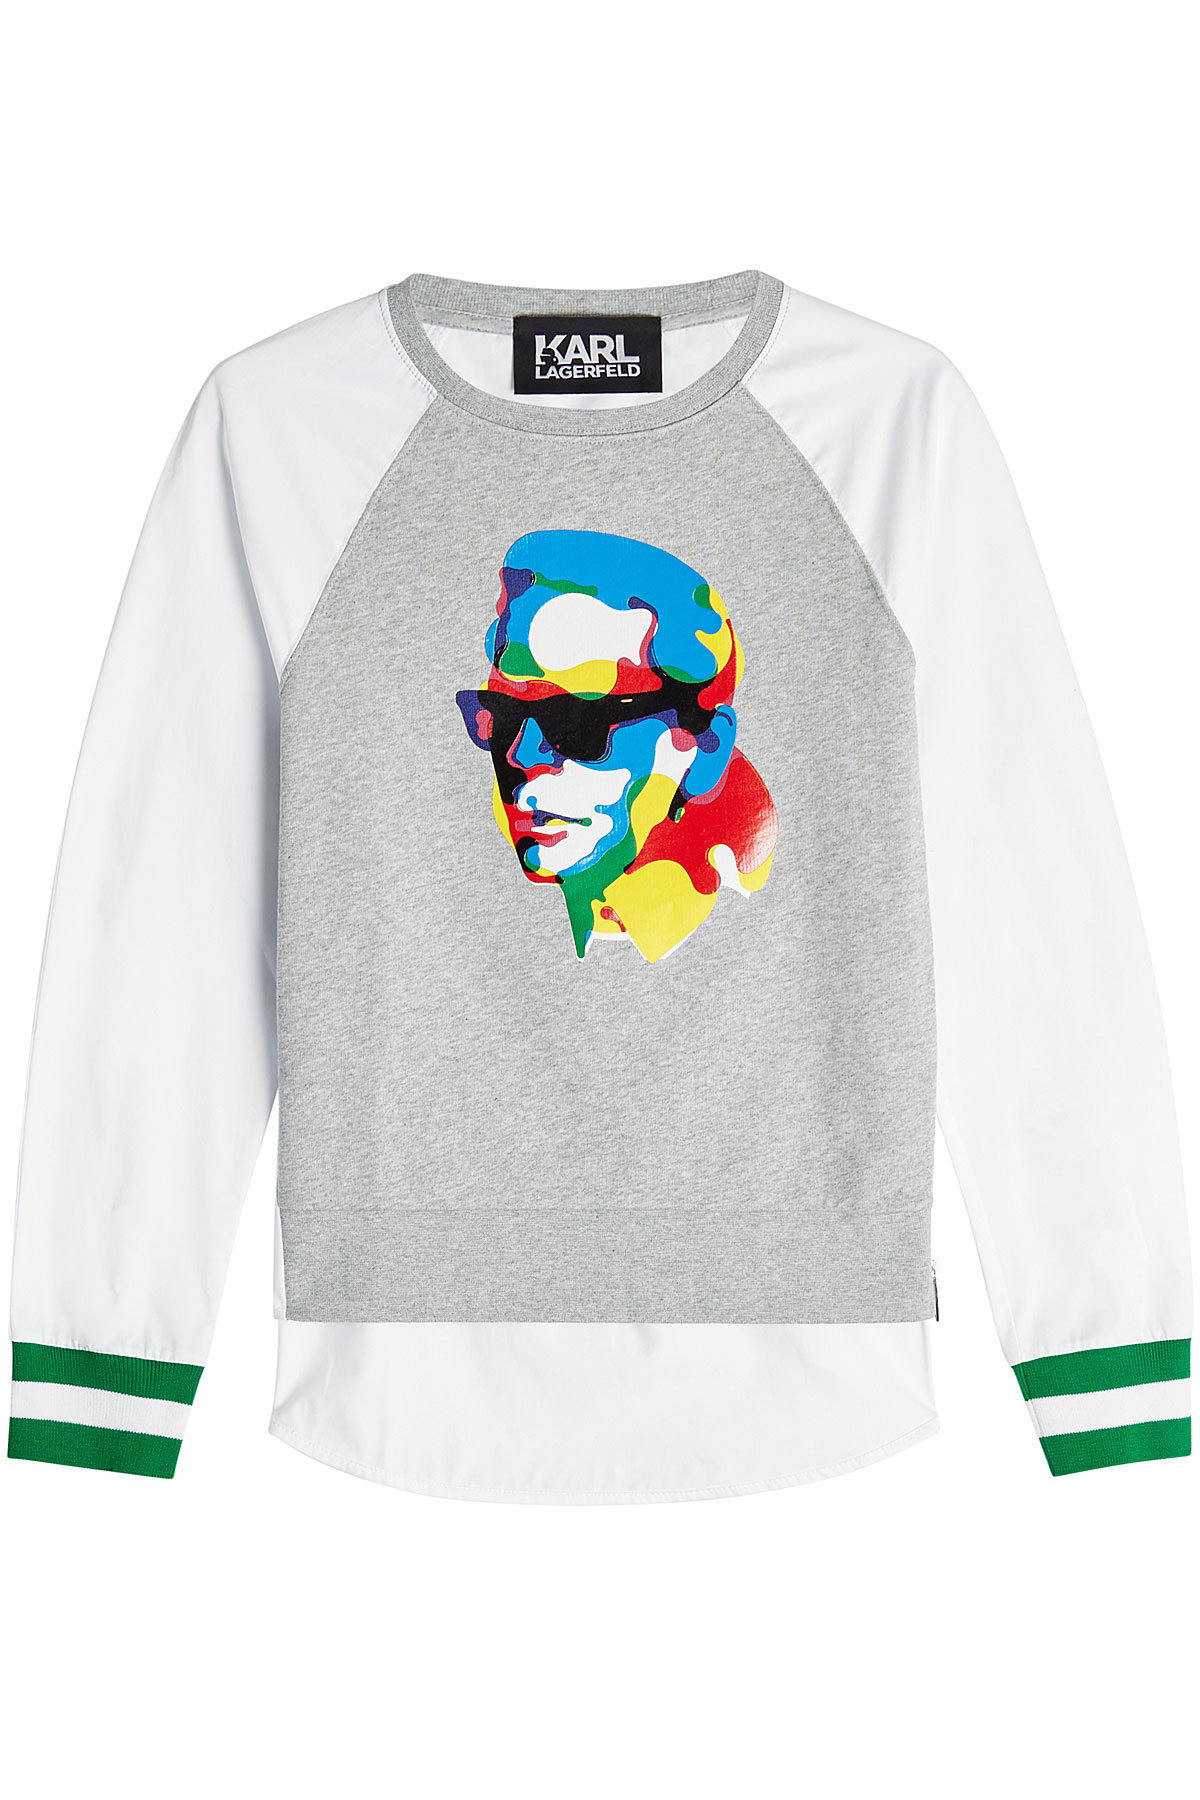 Karl Lagerfeld - X Steven Wilson Printed Cotton Sweatshirt